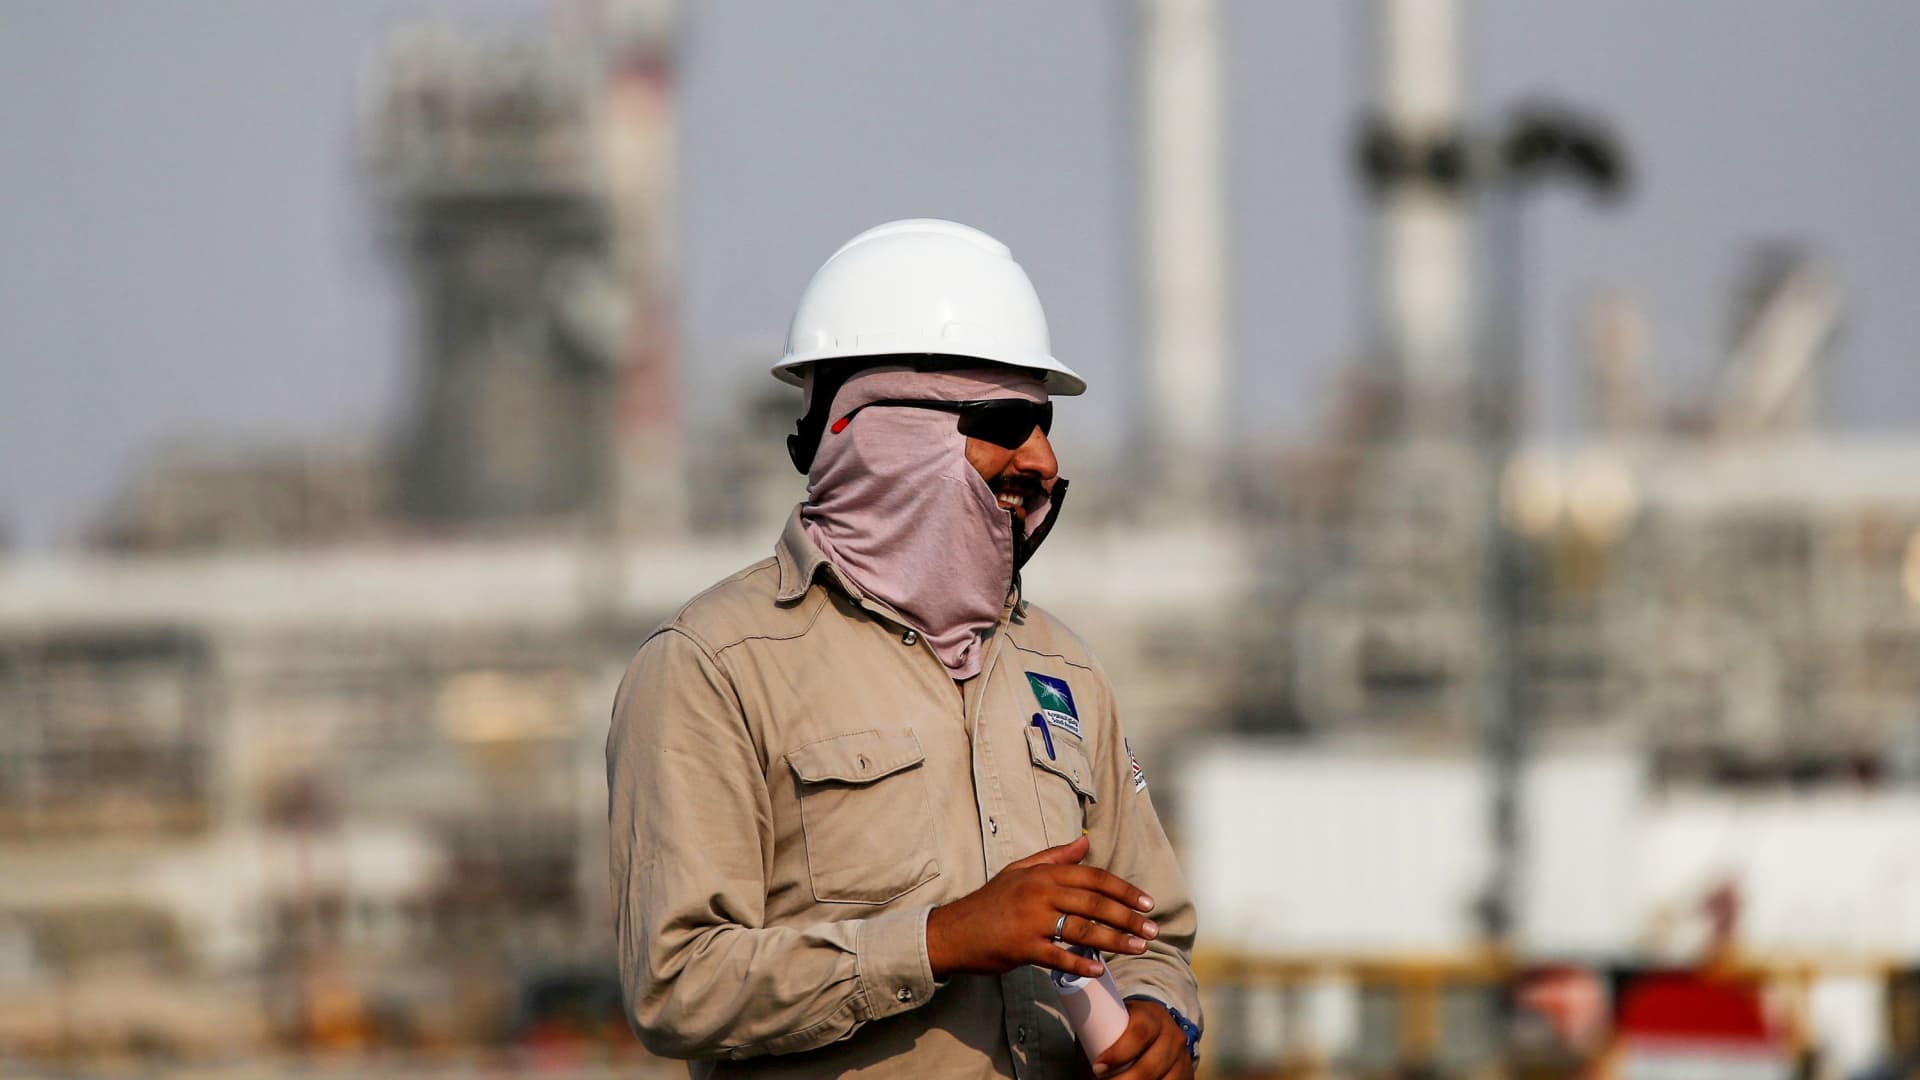 An employee looks on at Saudi Aramco oil facility in Abqaiq, Saudi Arabia October 12, 2019.